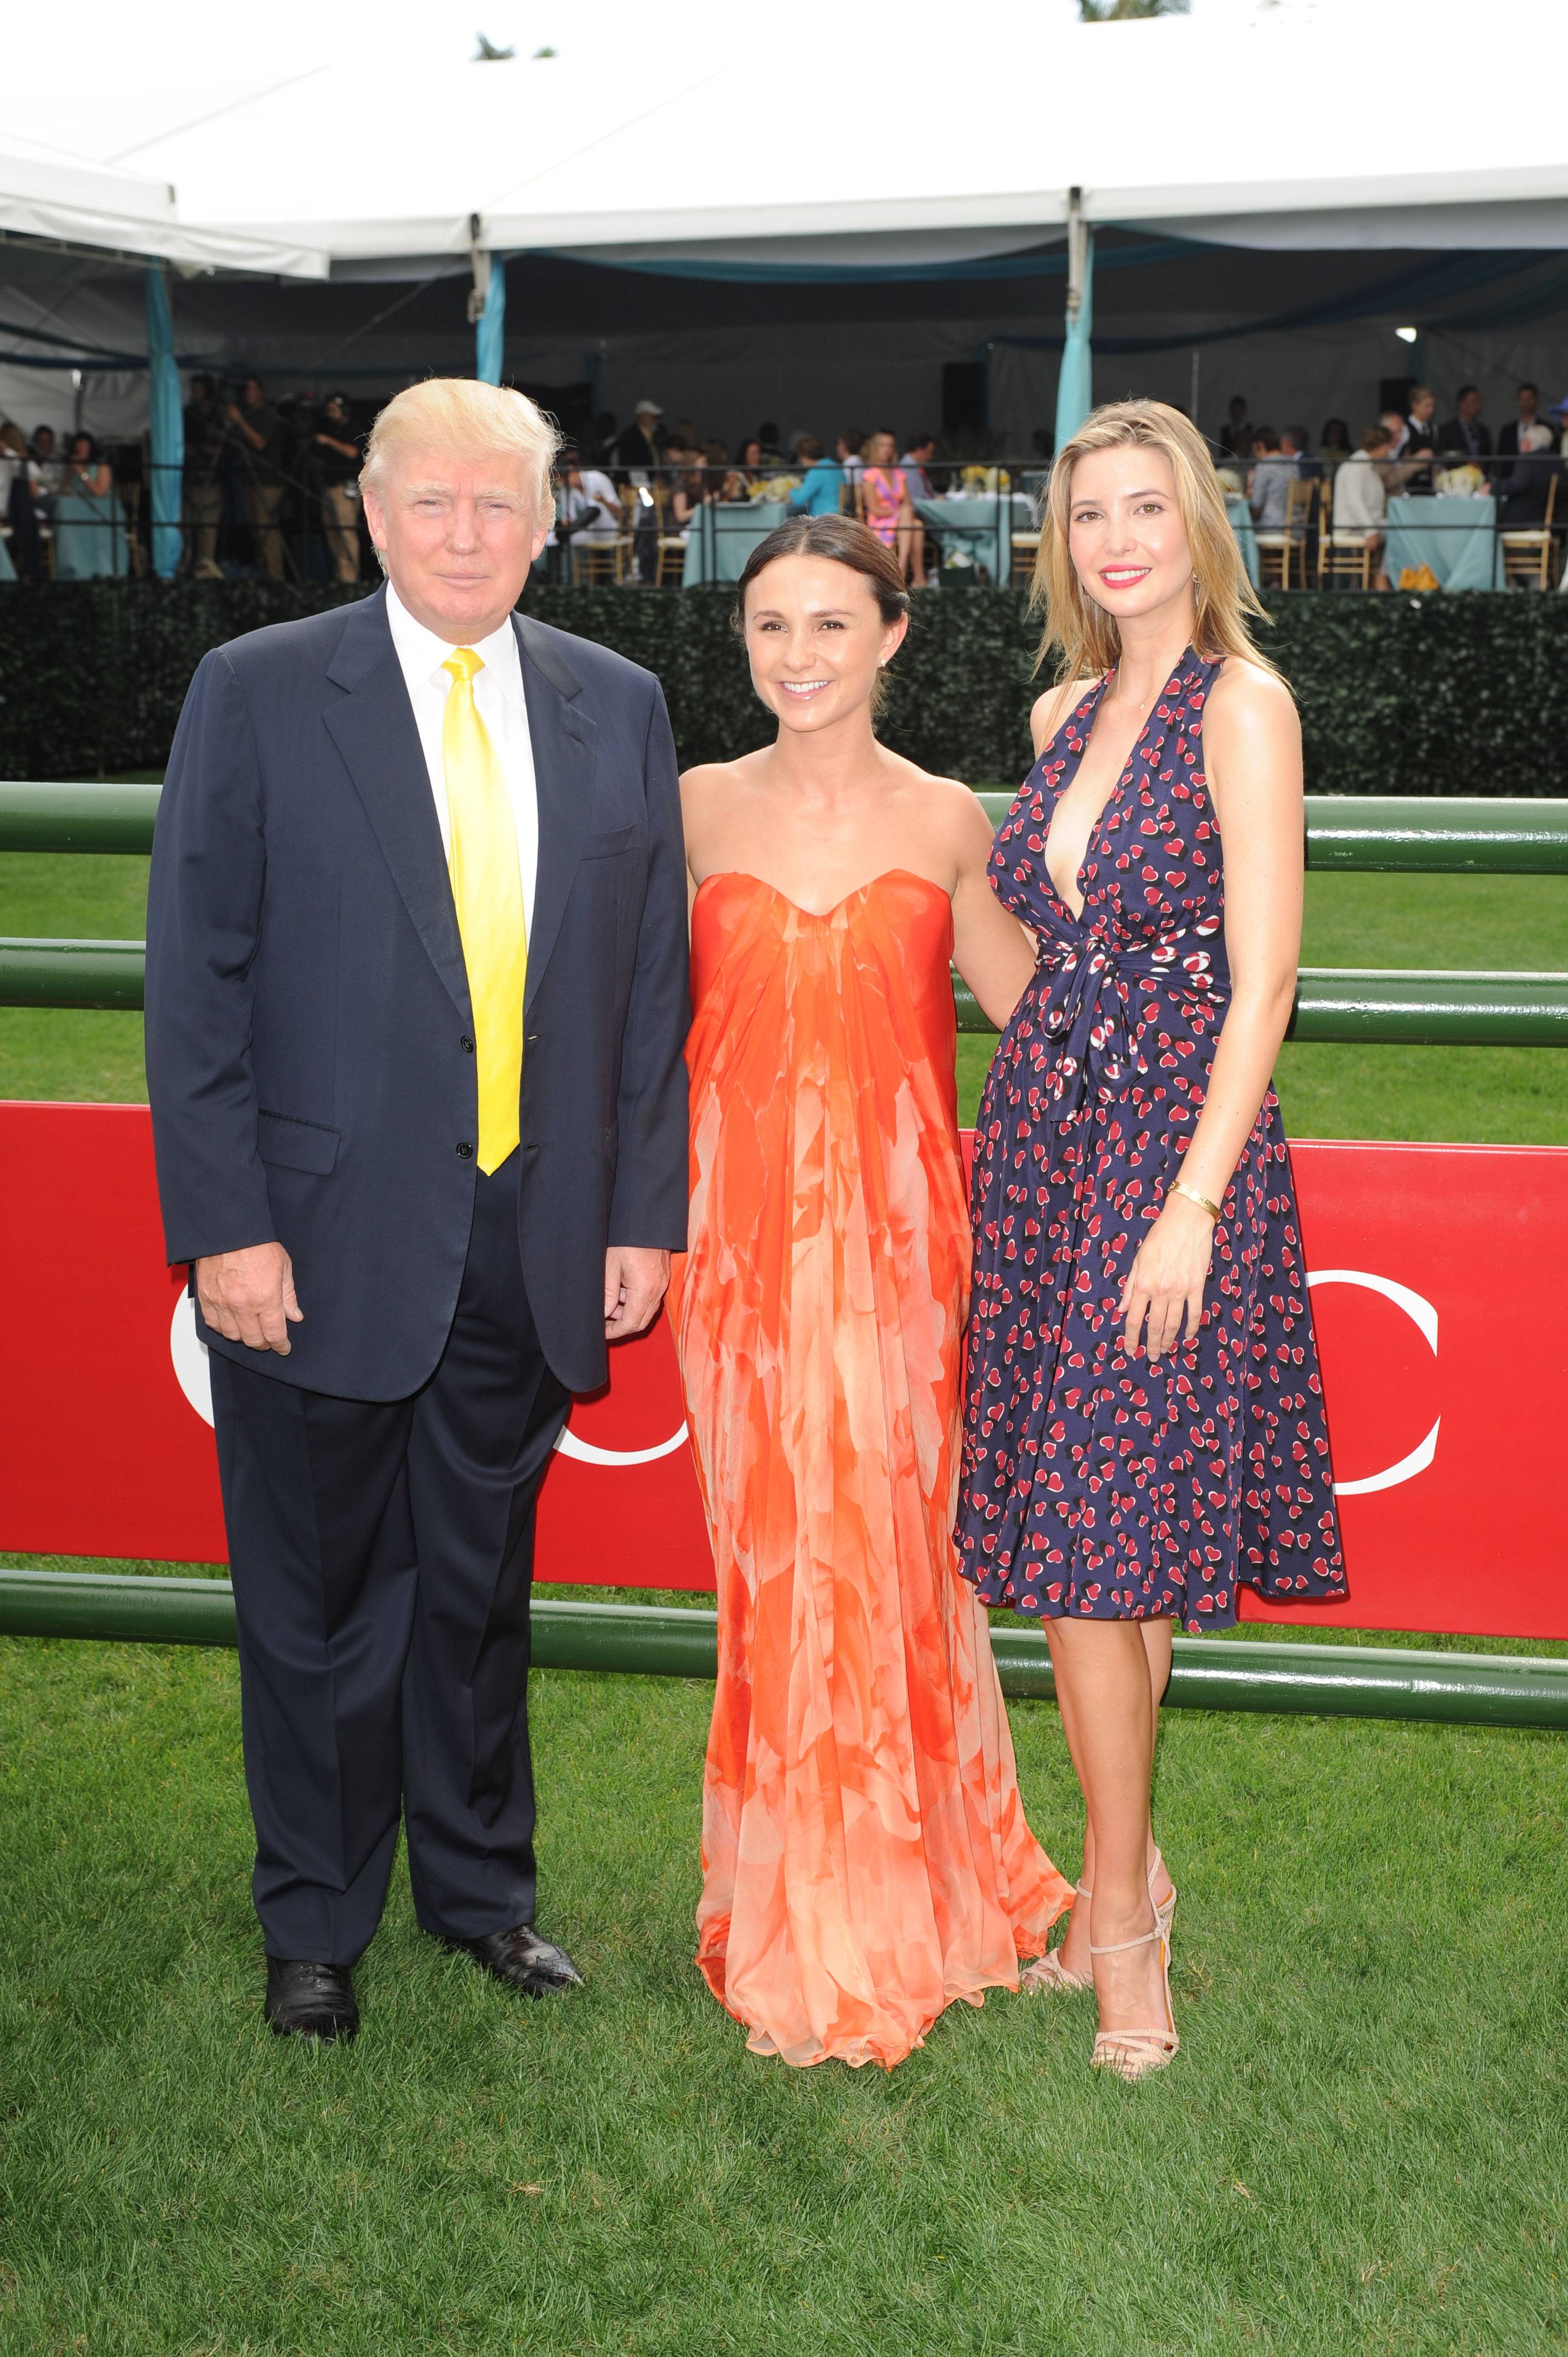 2014 Trump Invitational Grand Prix at Donald Trump's Palm Beach Estate